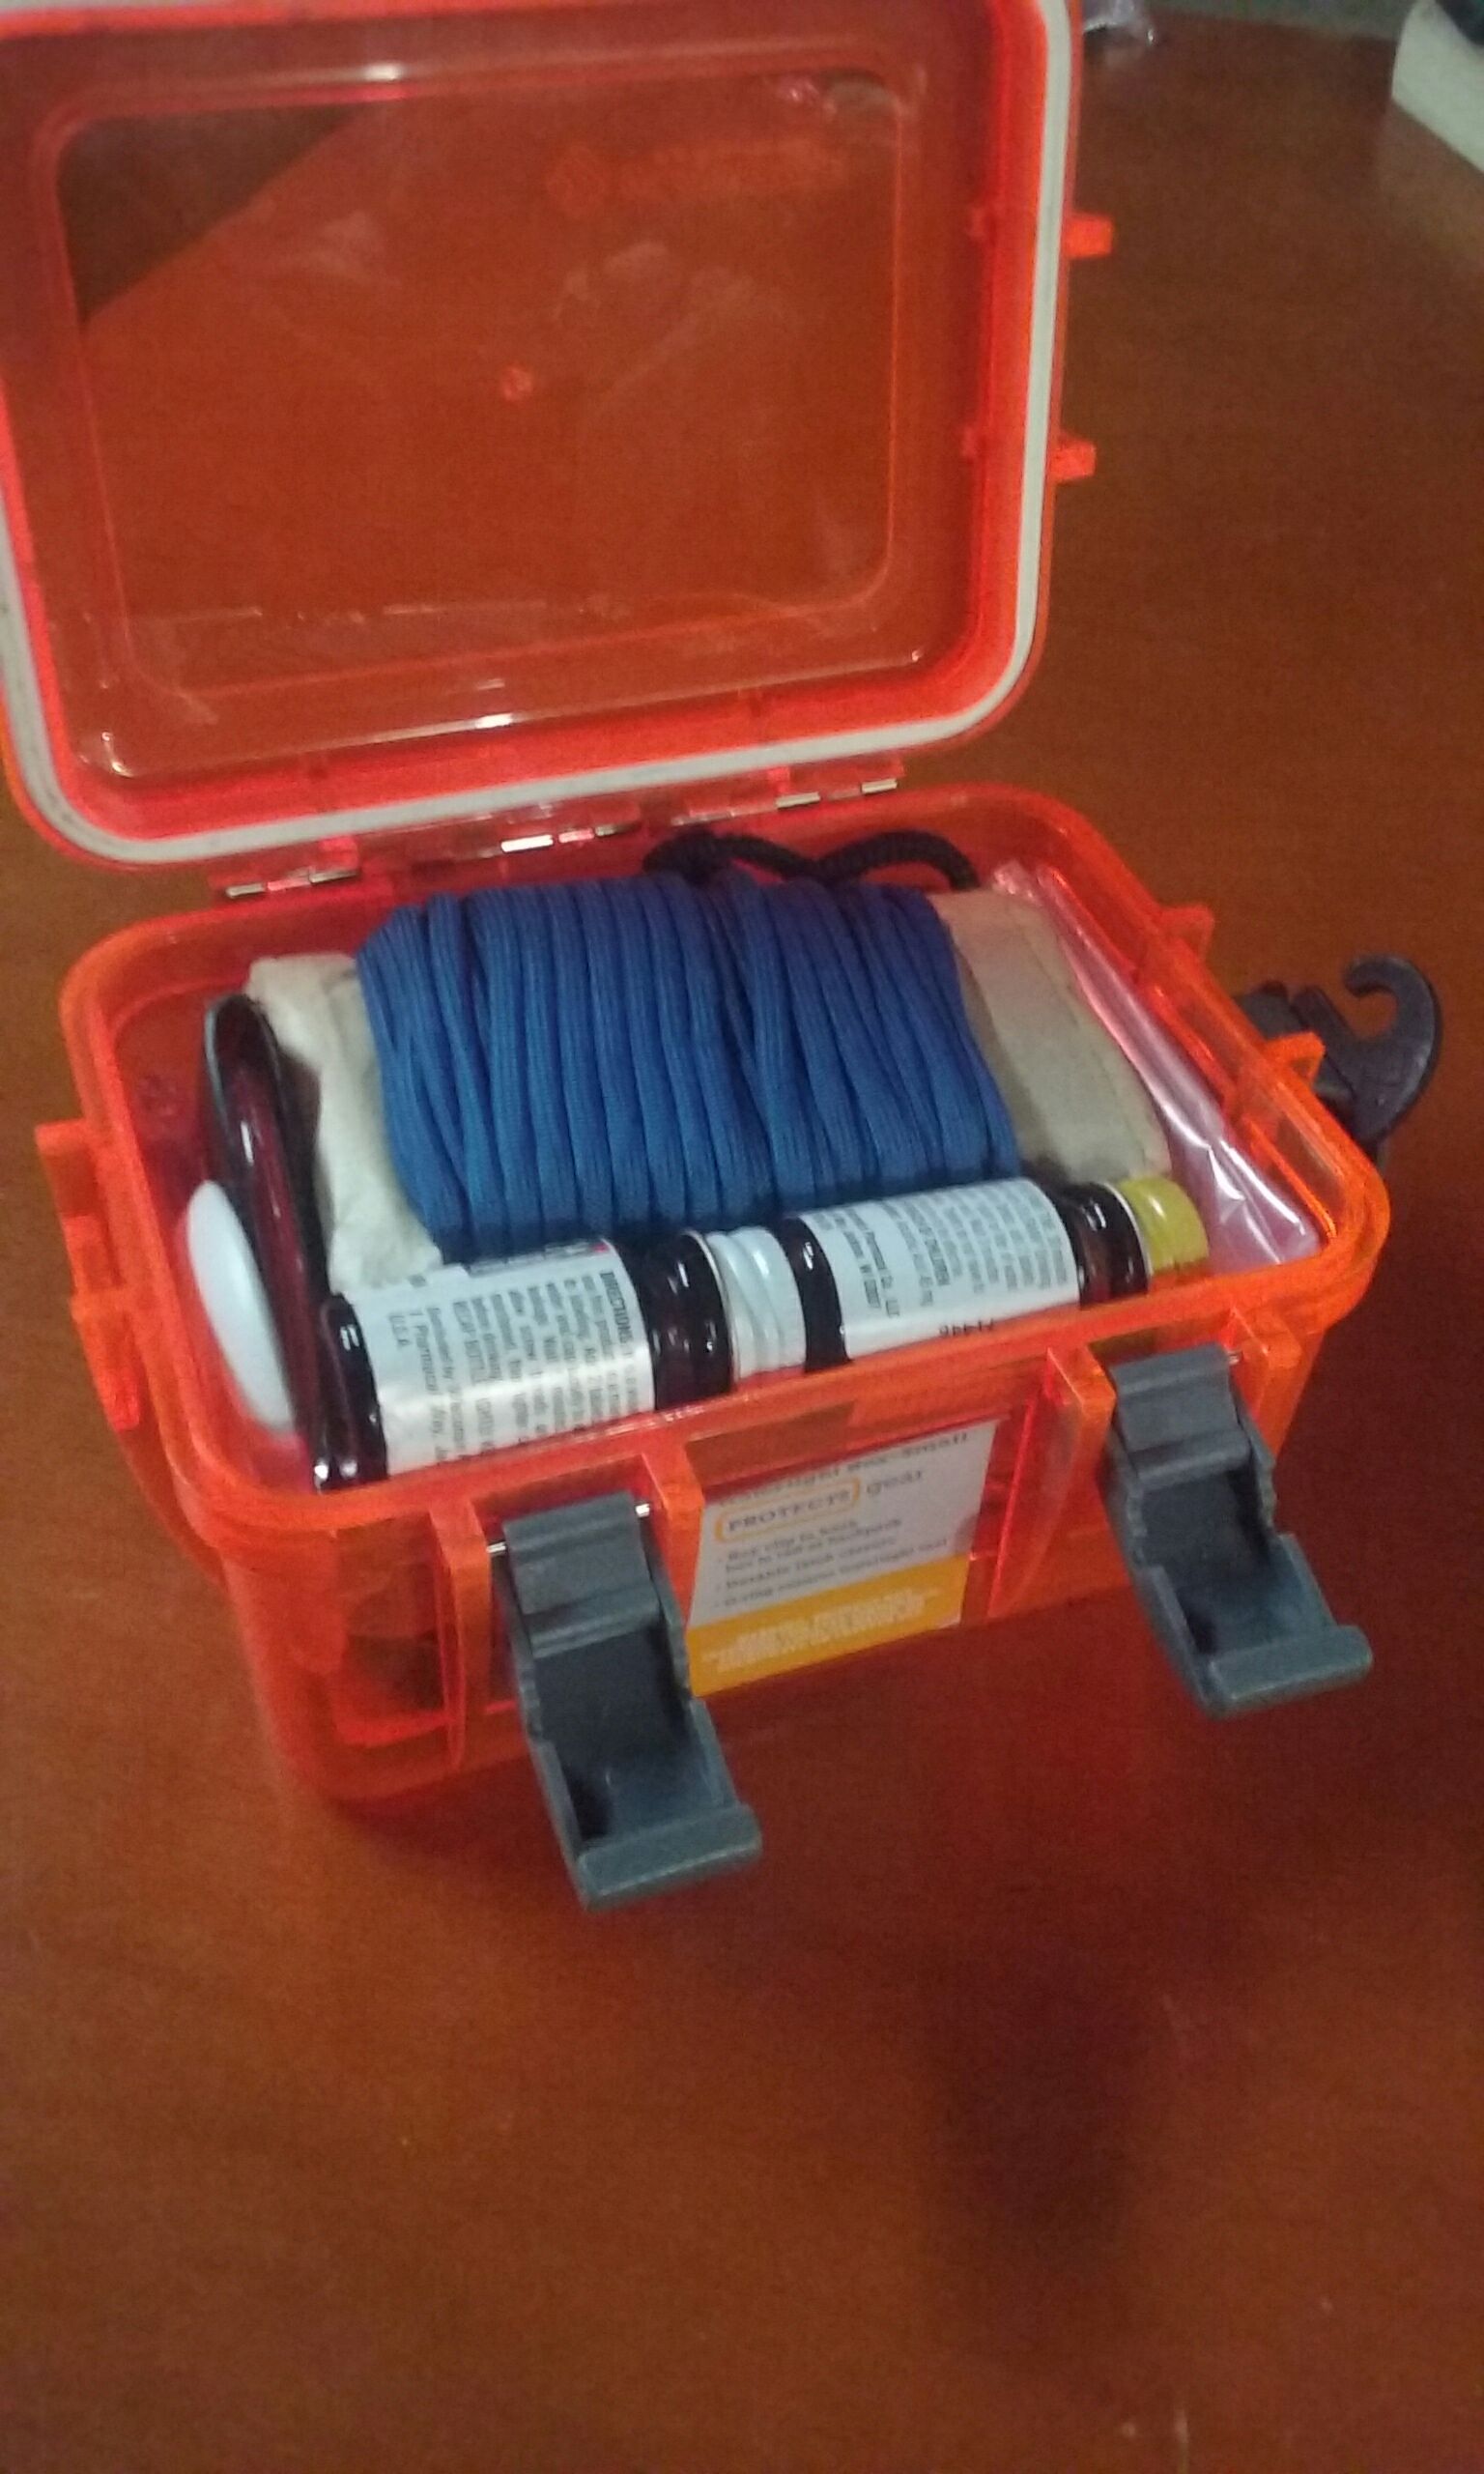 Basic Survival Kit